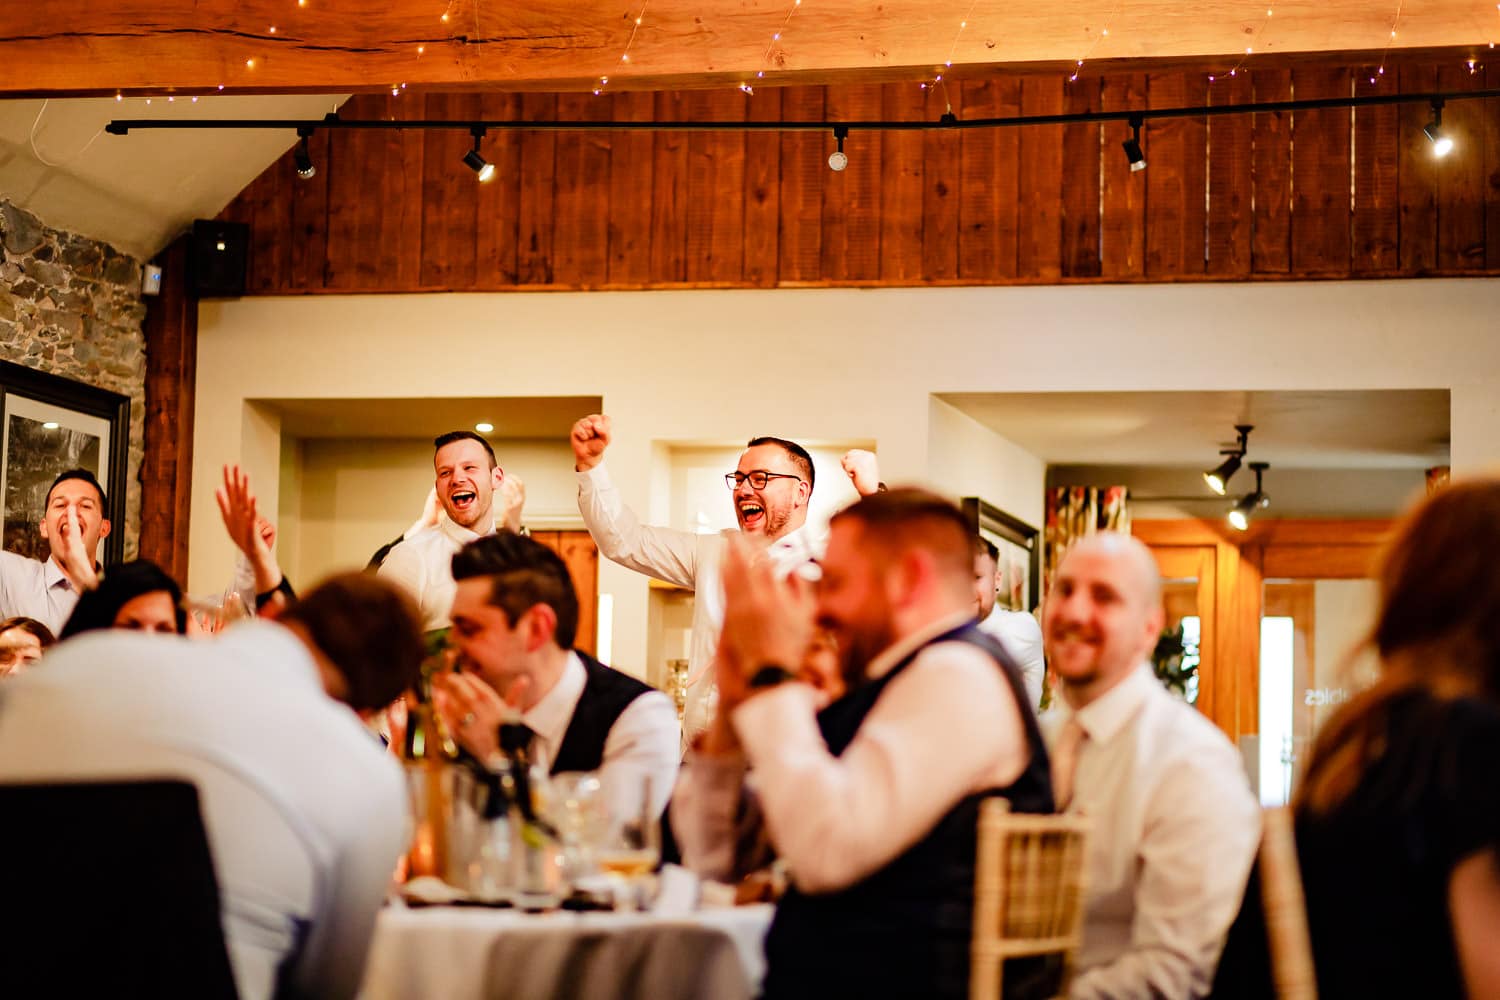 Wedding guests cheer and laugh during wedding reception bingo